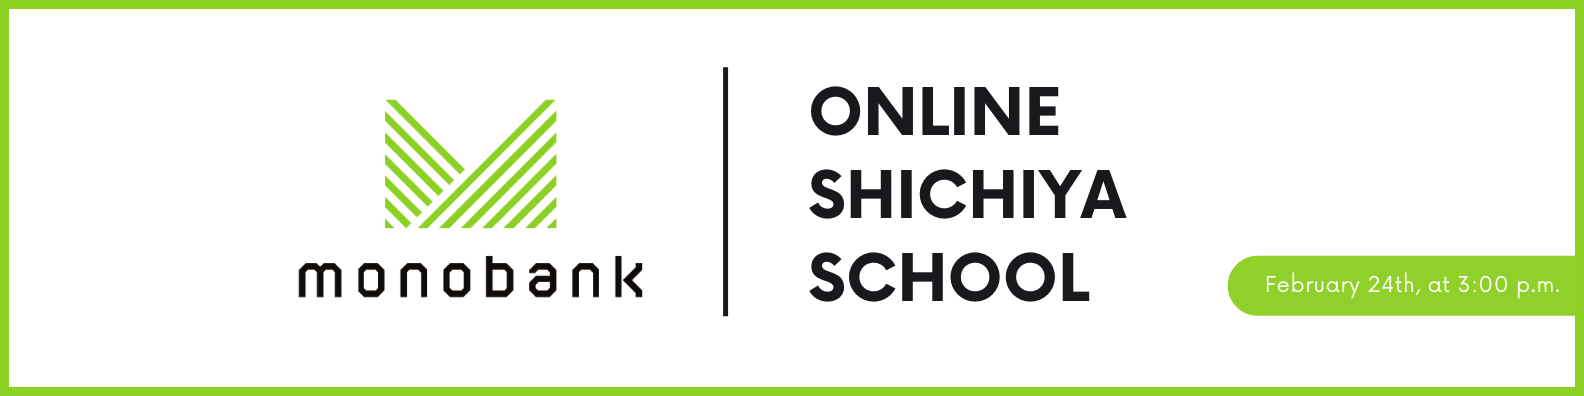 monobank news｜2月 オンライン質屋学校開催決定のおしらせ